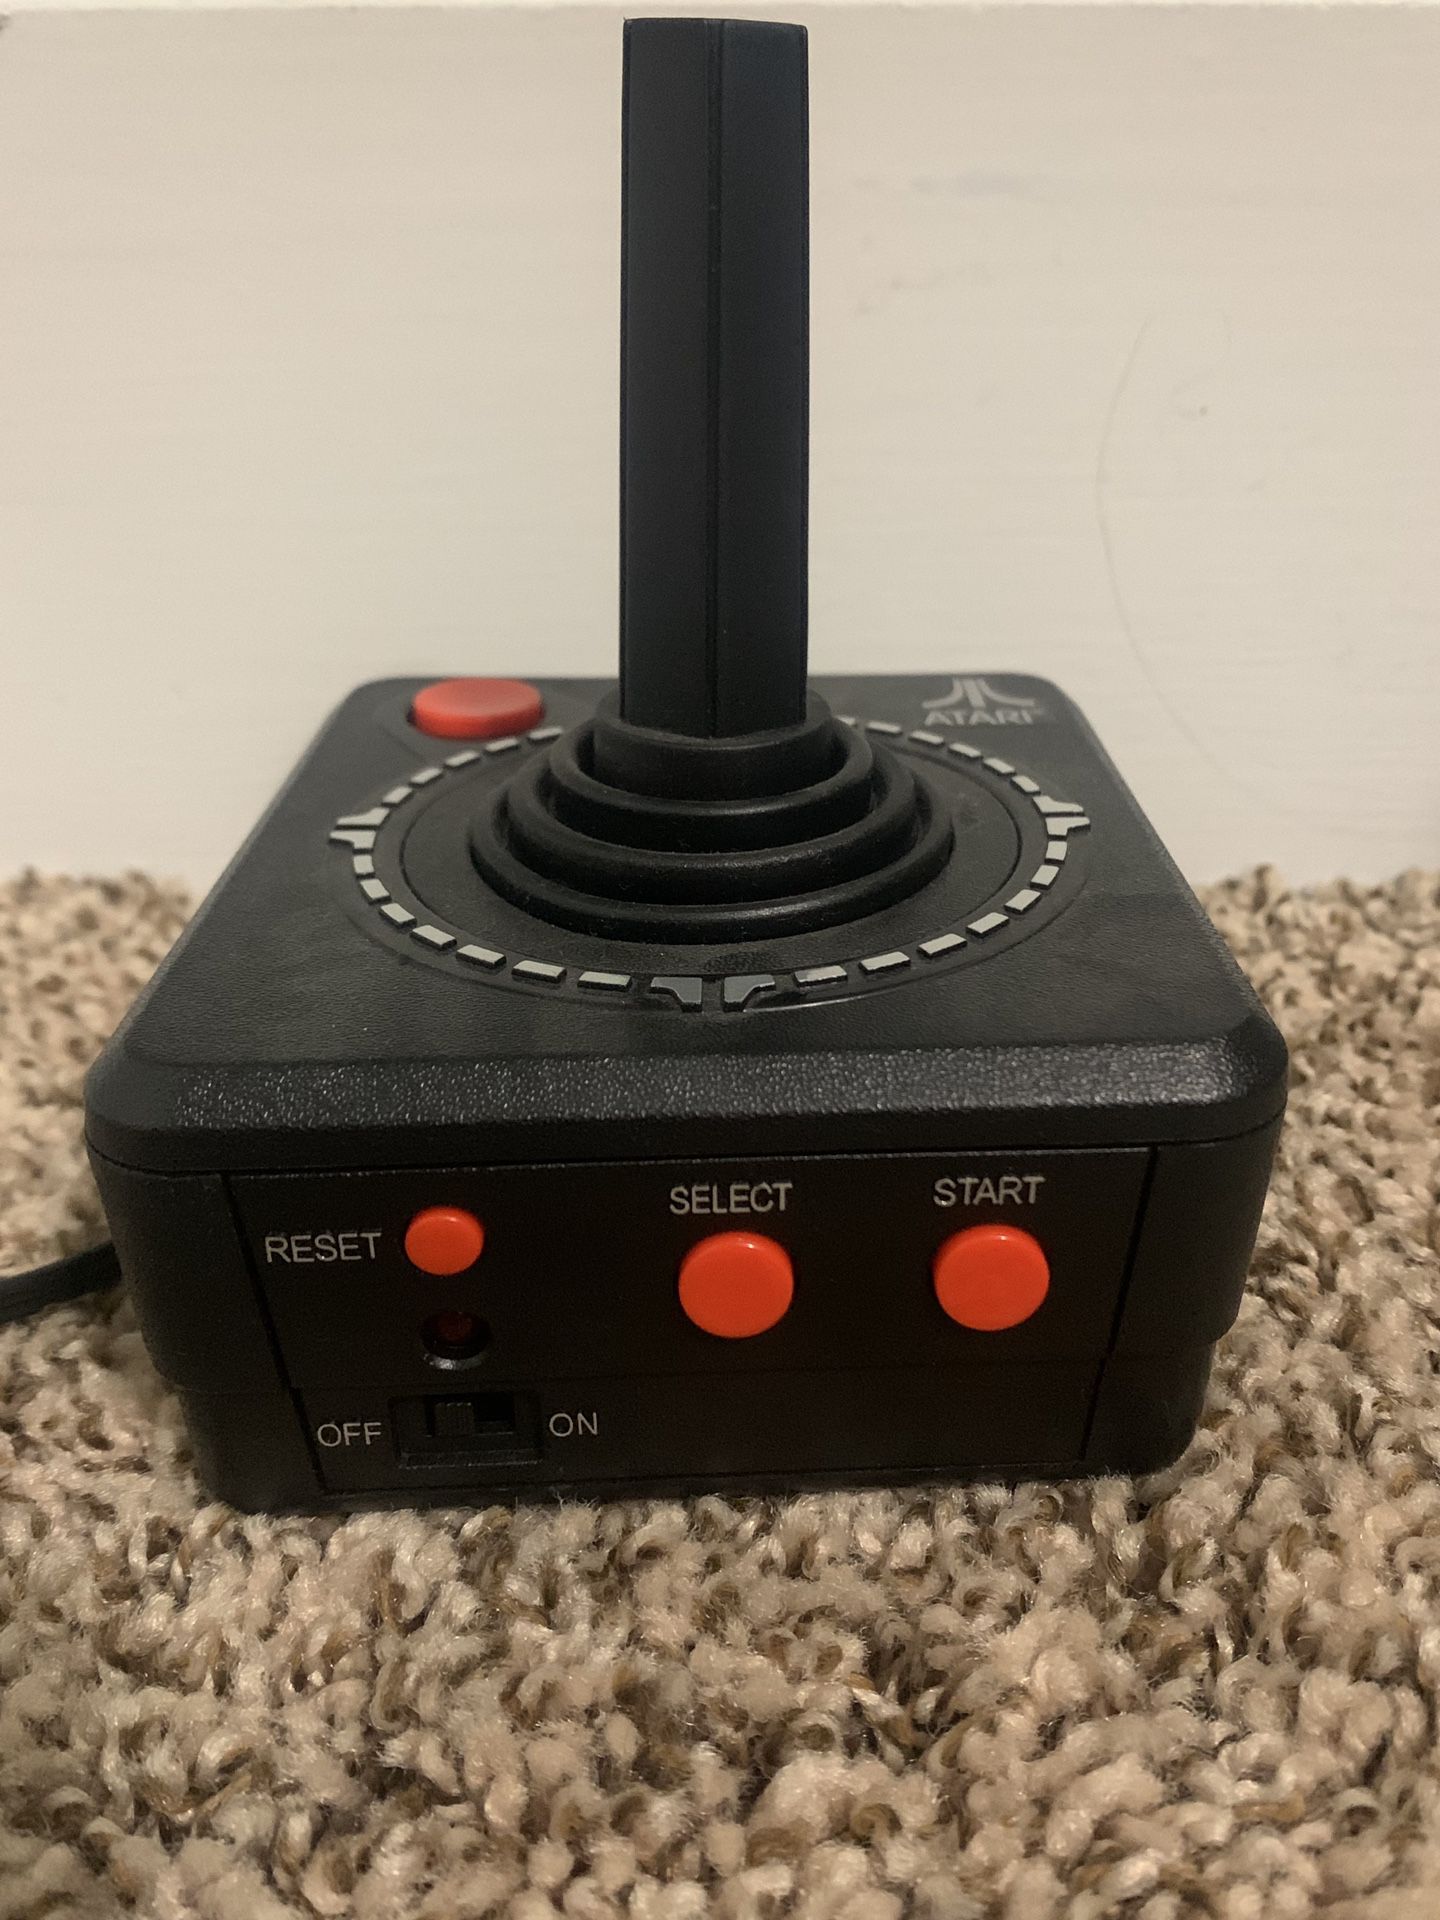 Atari Plus and Play